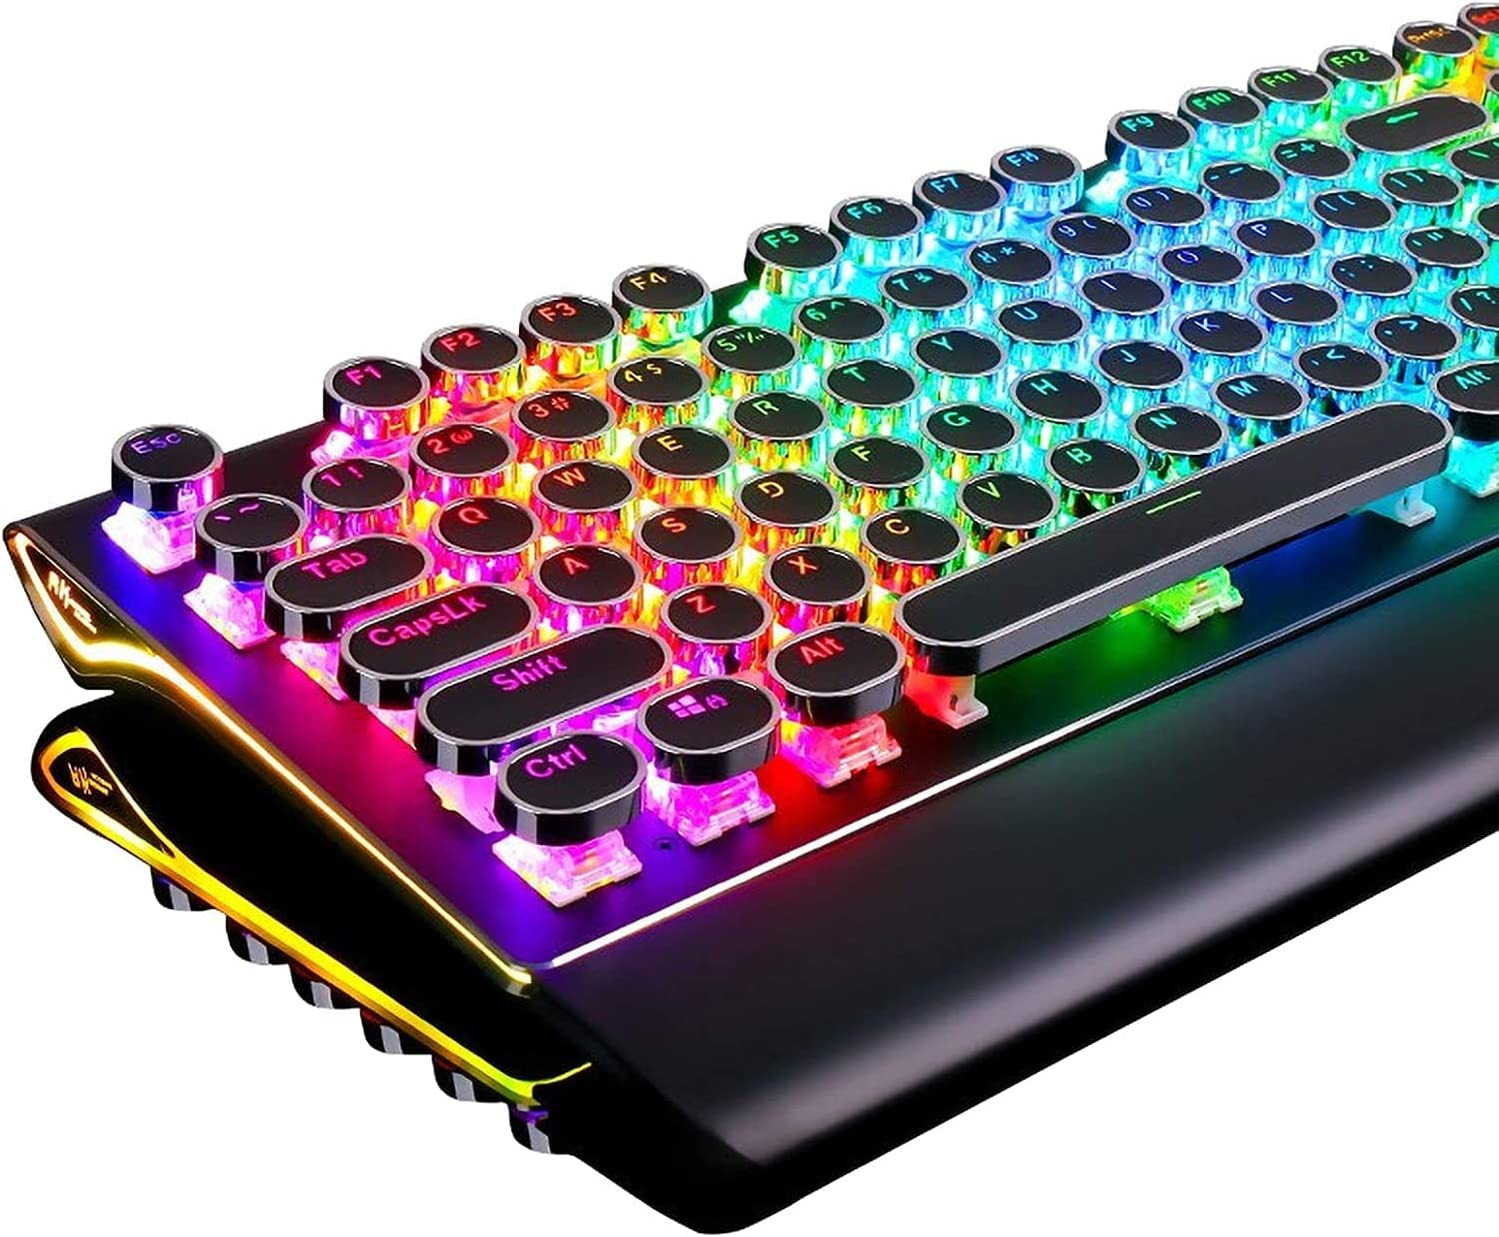 RK ROYAL KLUDGE Typewriter Style Mechanical Gaming Keyboard with True RGB Wrist